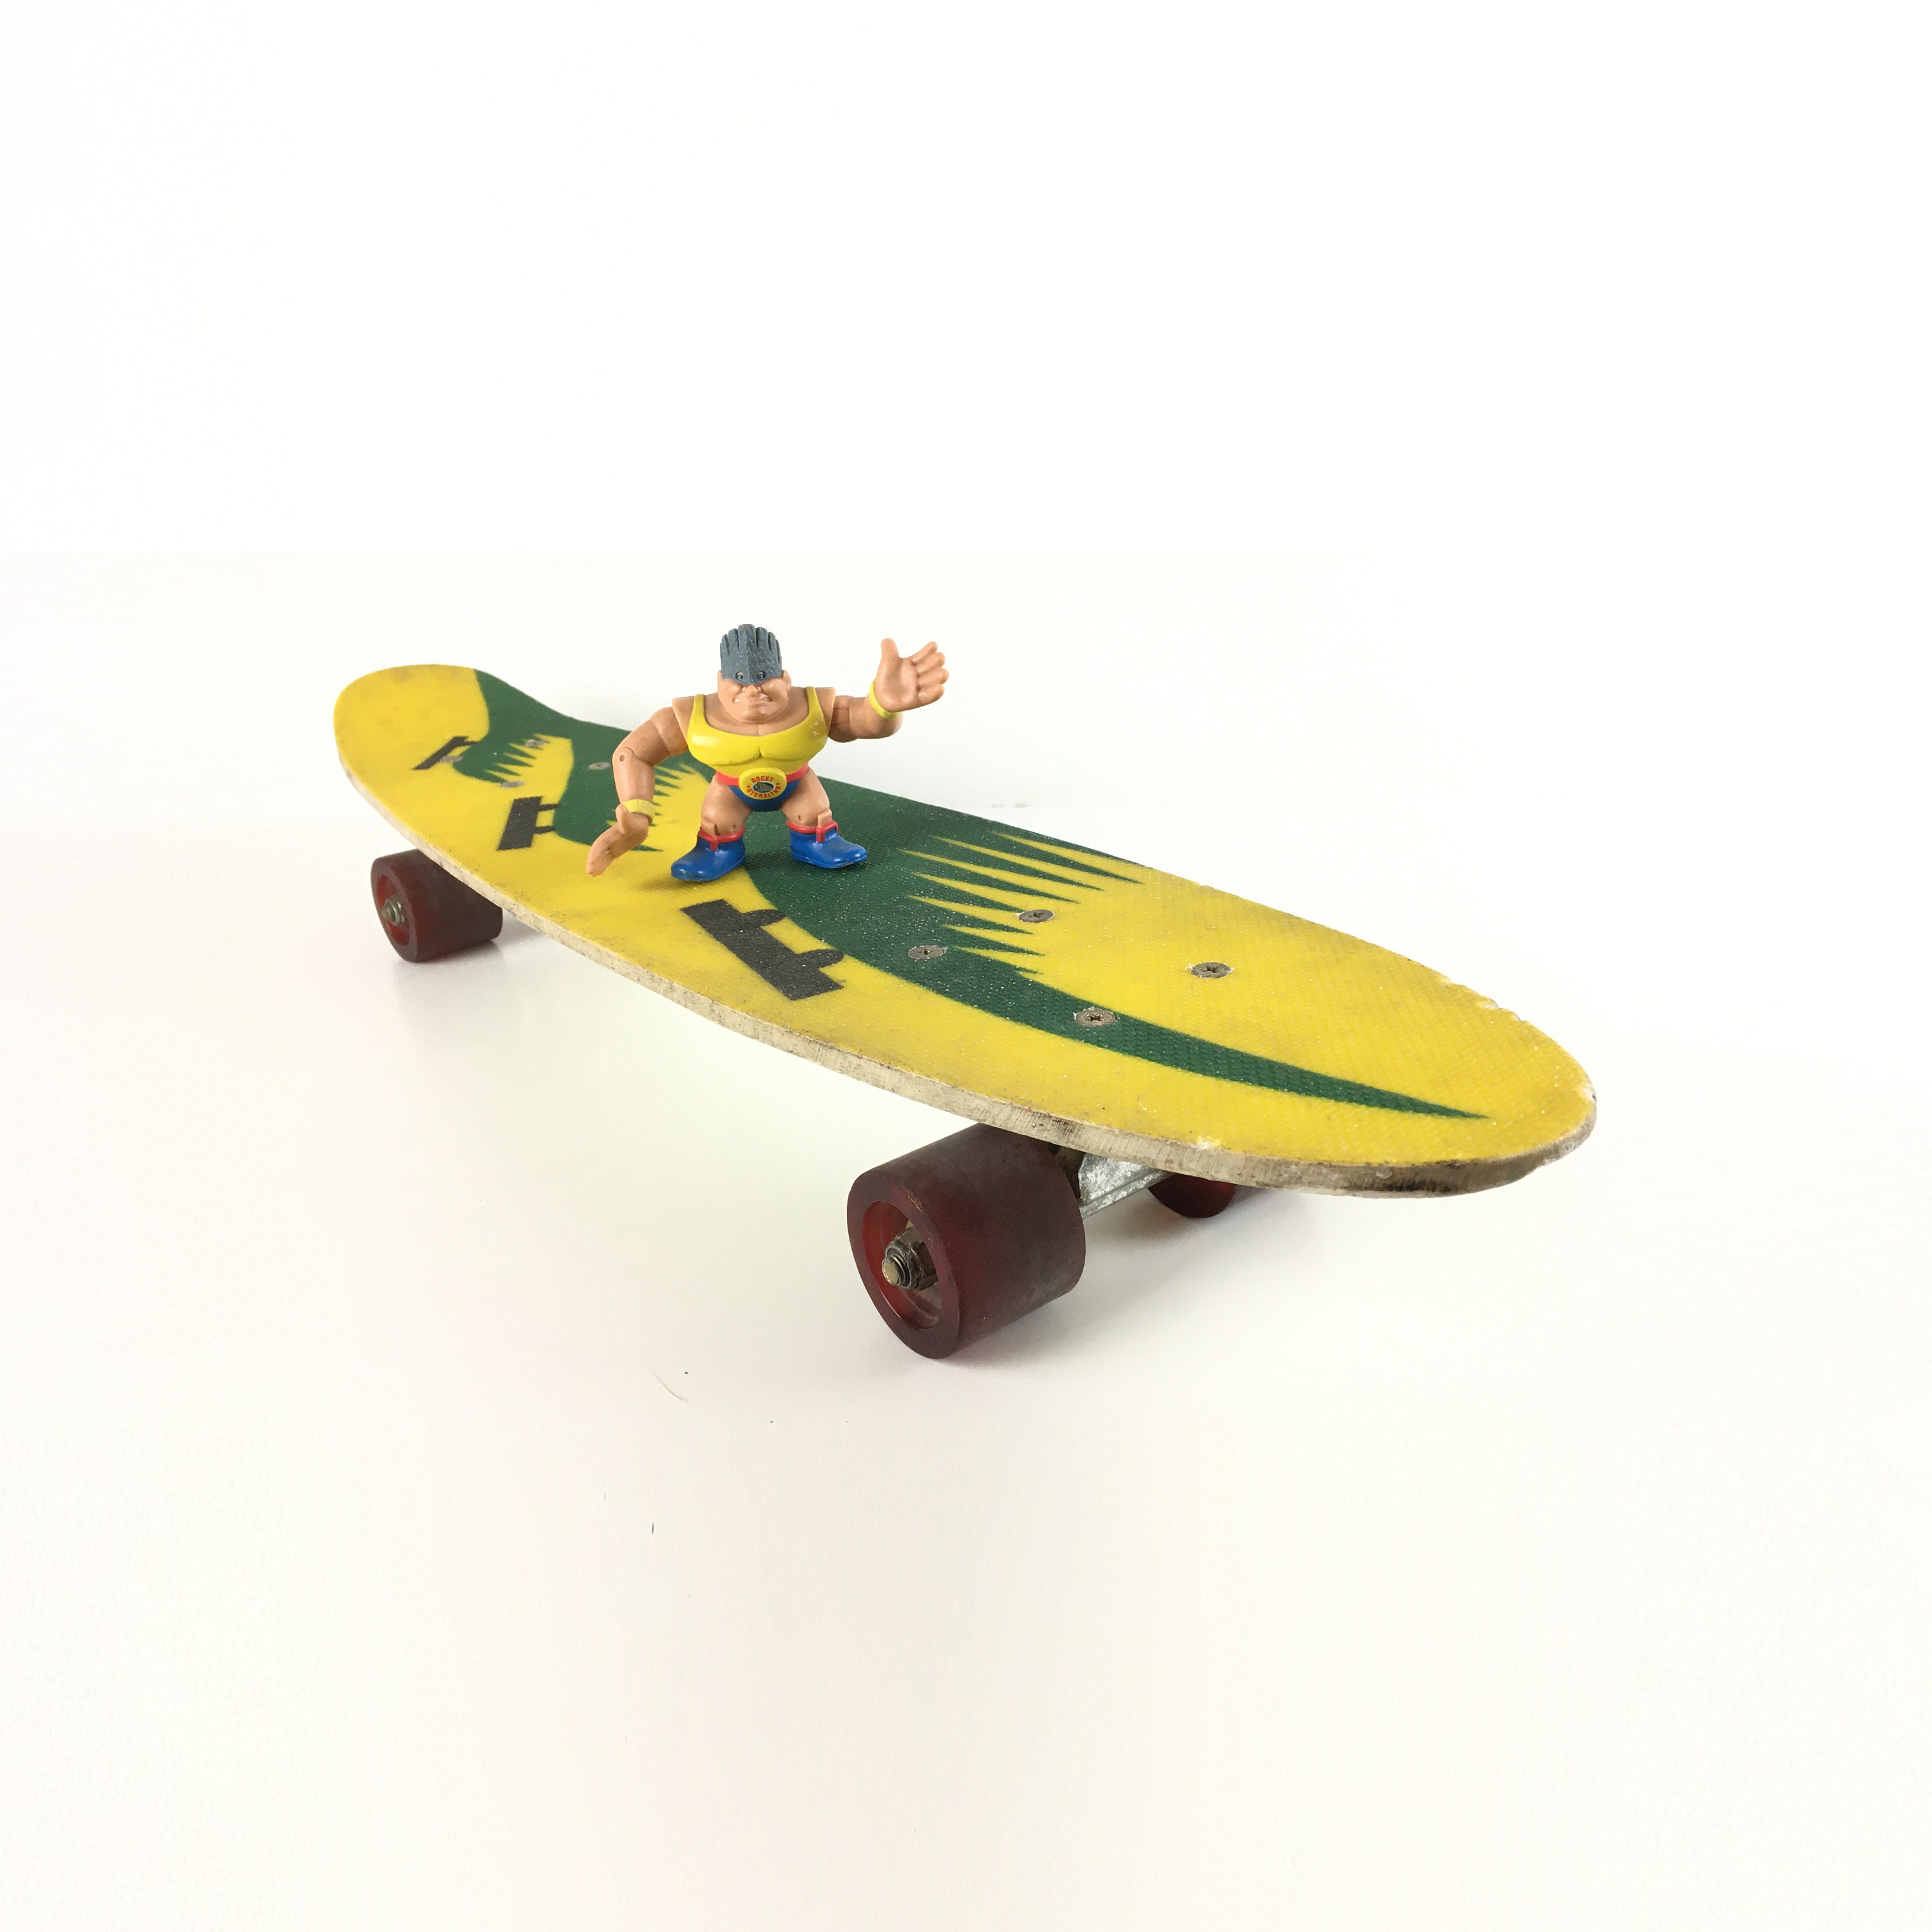 Vintage Fiberglass Skateboard s Yellow Green   Etsy